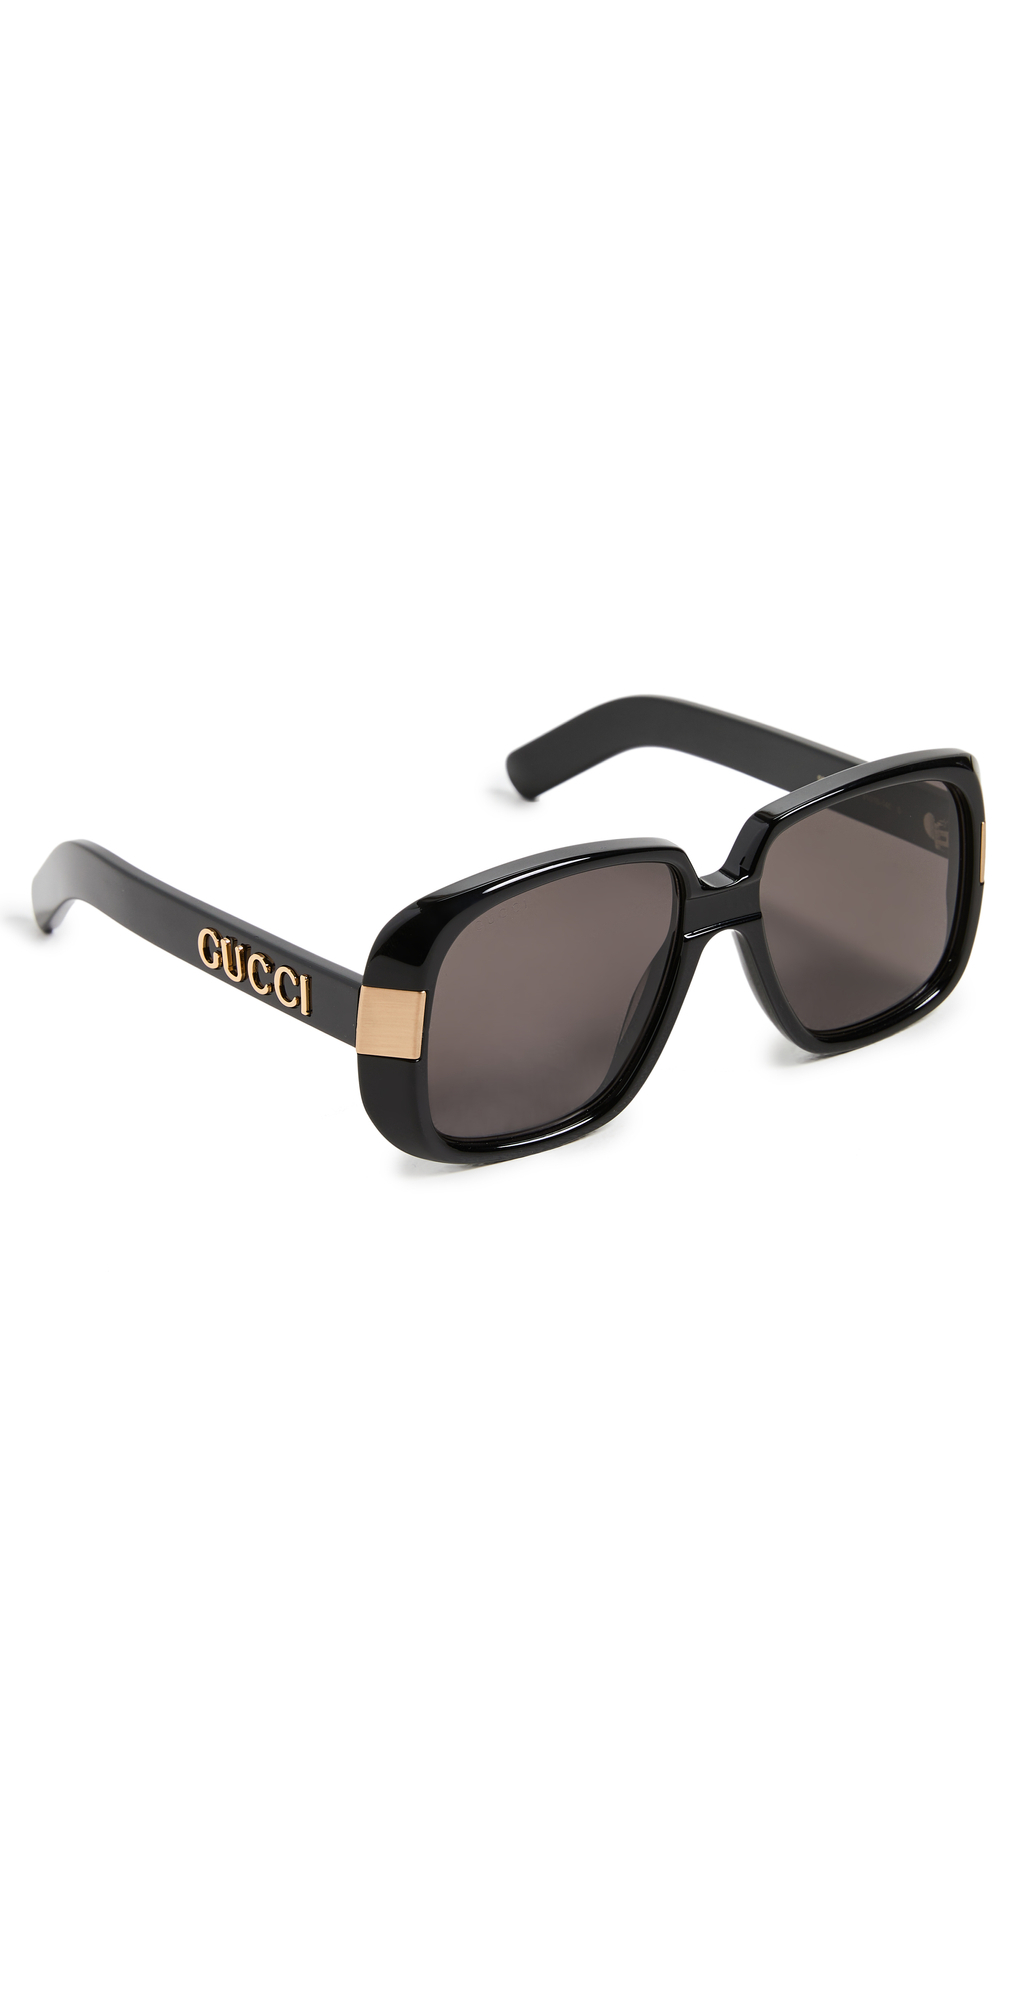 Gucci Pineapple Sunglasses in black / grey